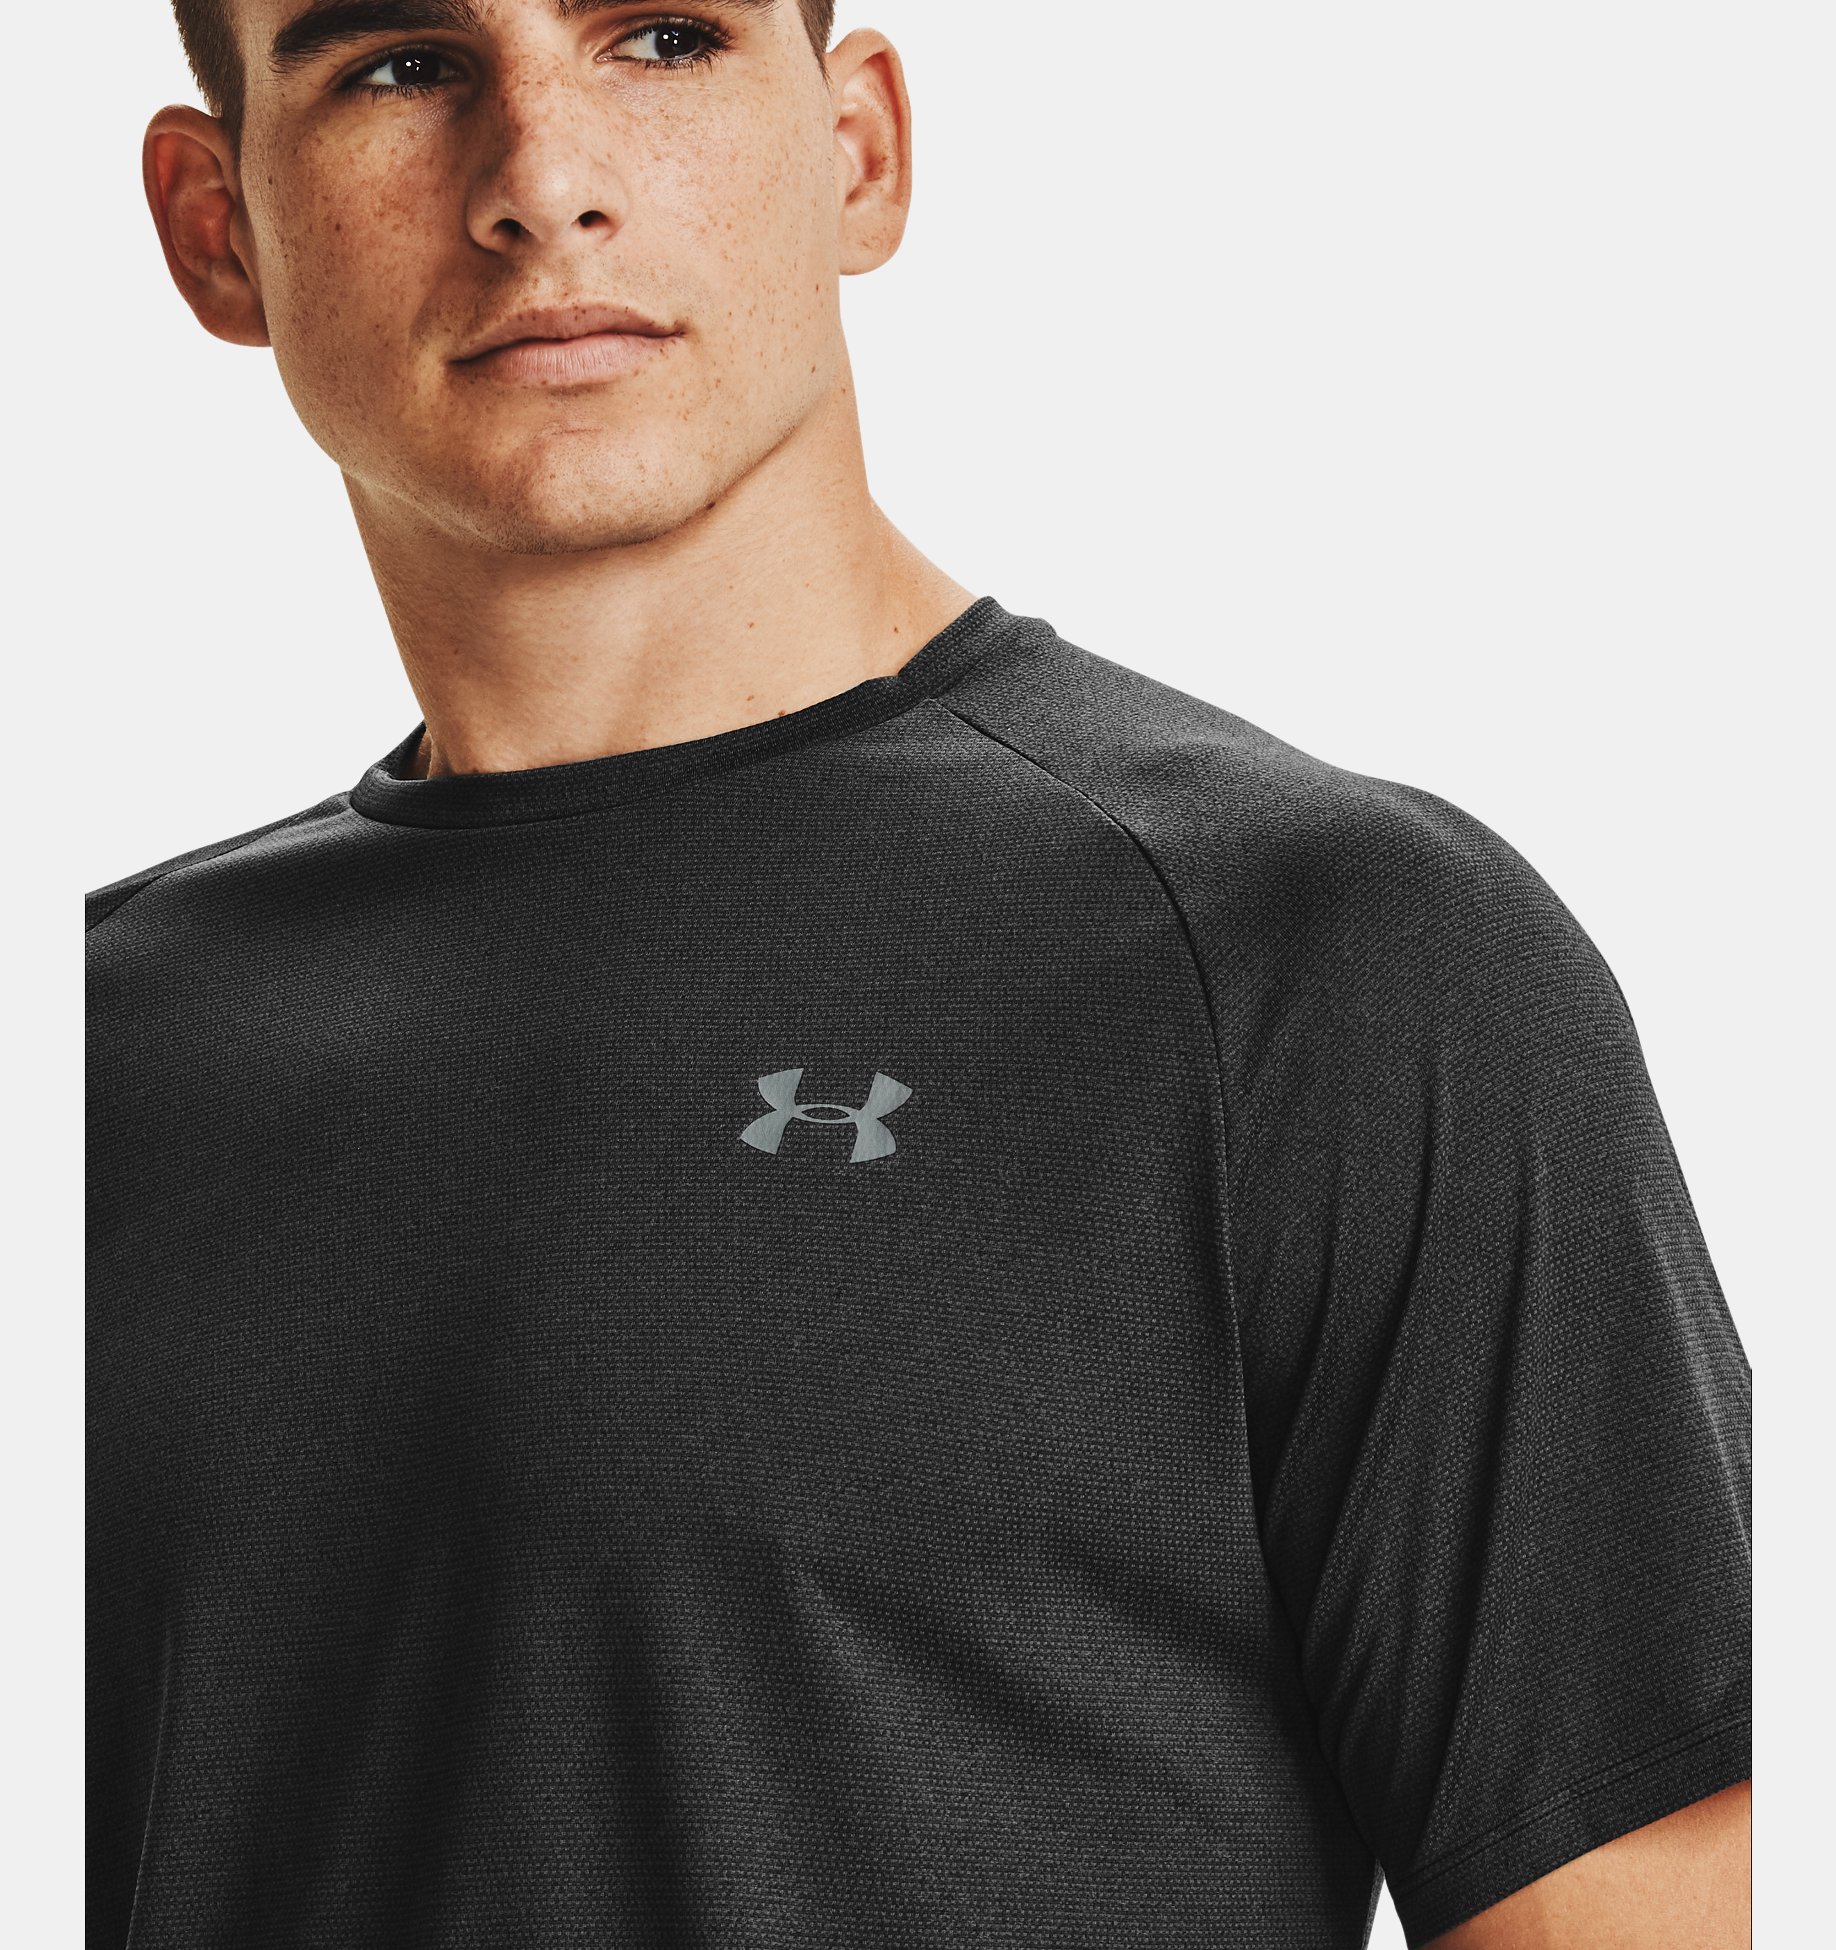 Under Armour Tech Mens Training Top Black Short Sleeve T-Shirt Gym Running M XL 